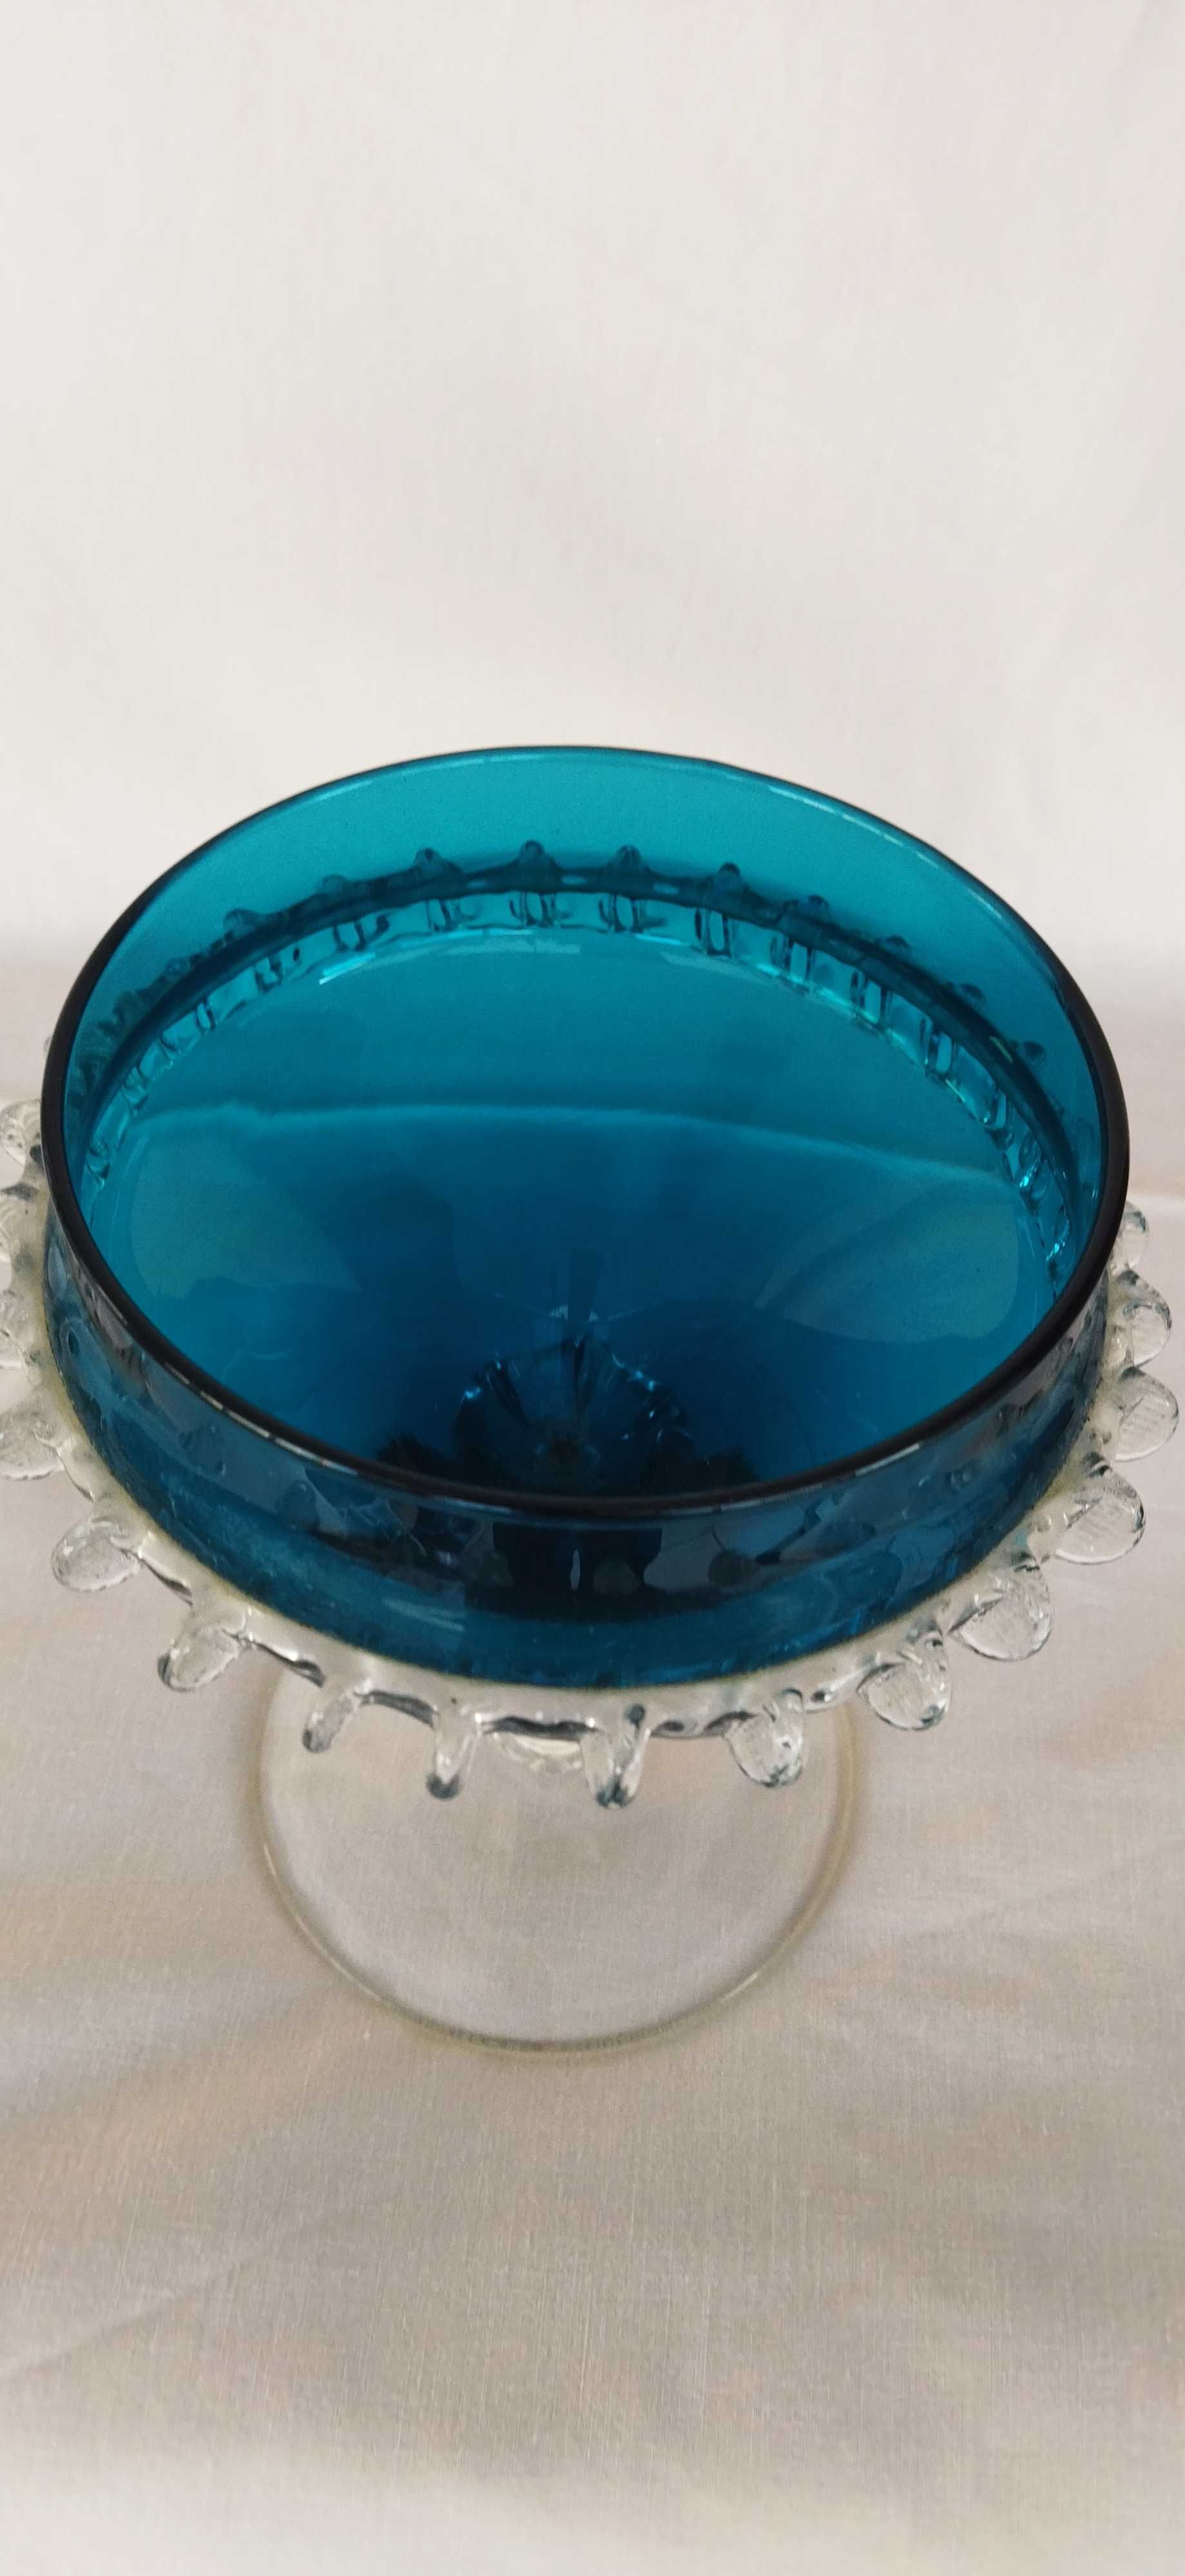 Вазочка,конфетница из синего стекла.17,5×12,5 см.Франция